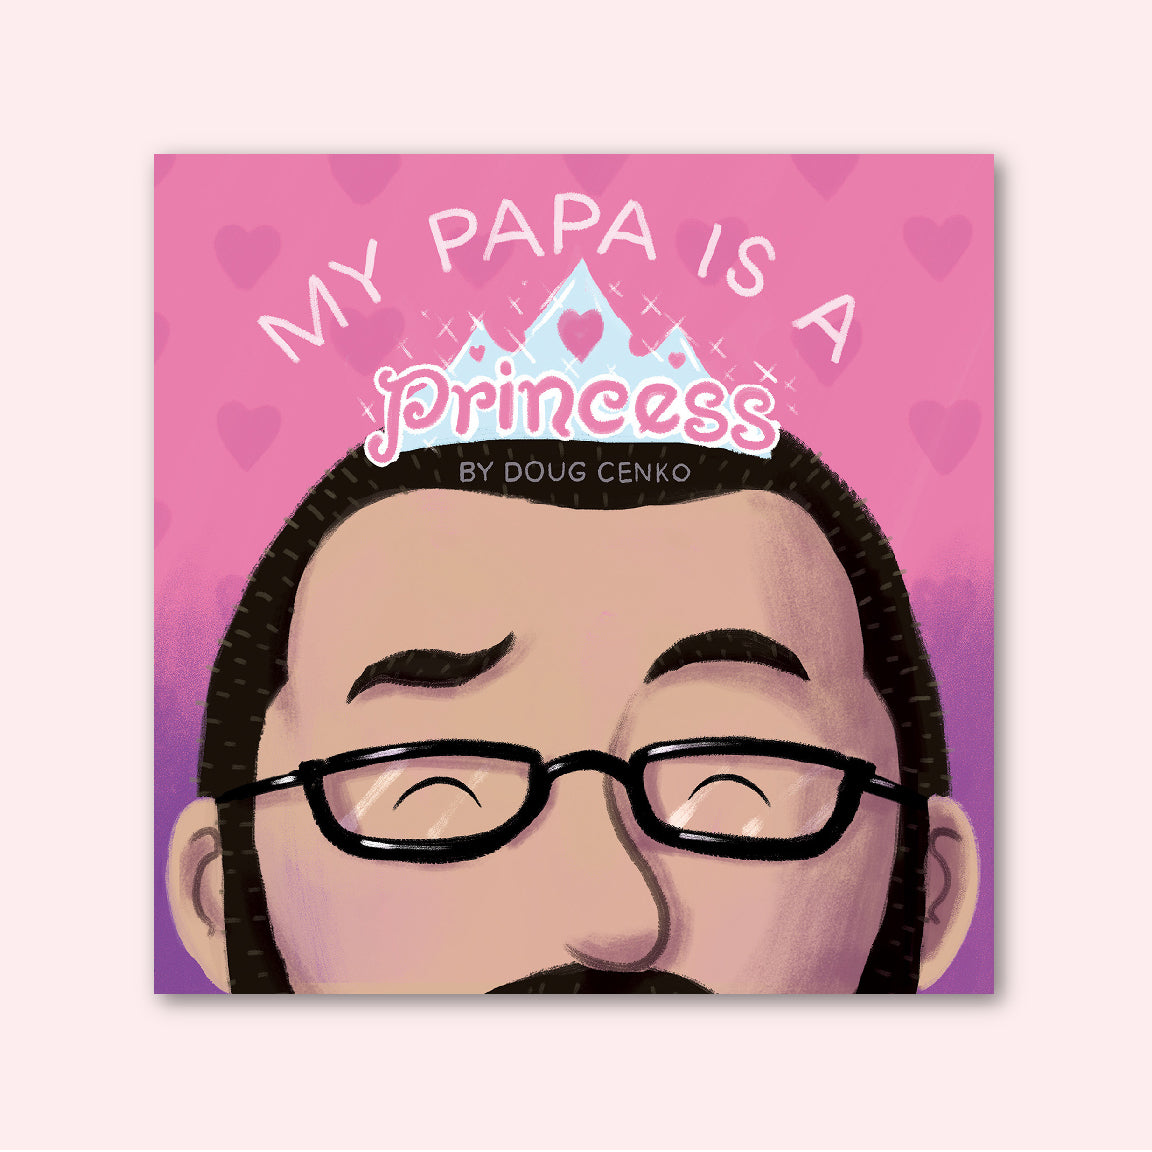 My Papa is a Princess by Doug Cenko